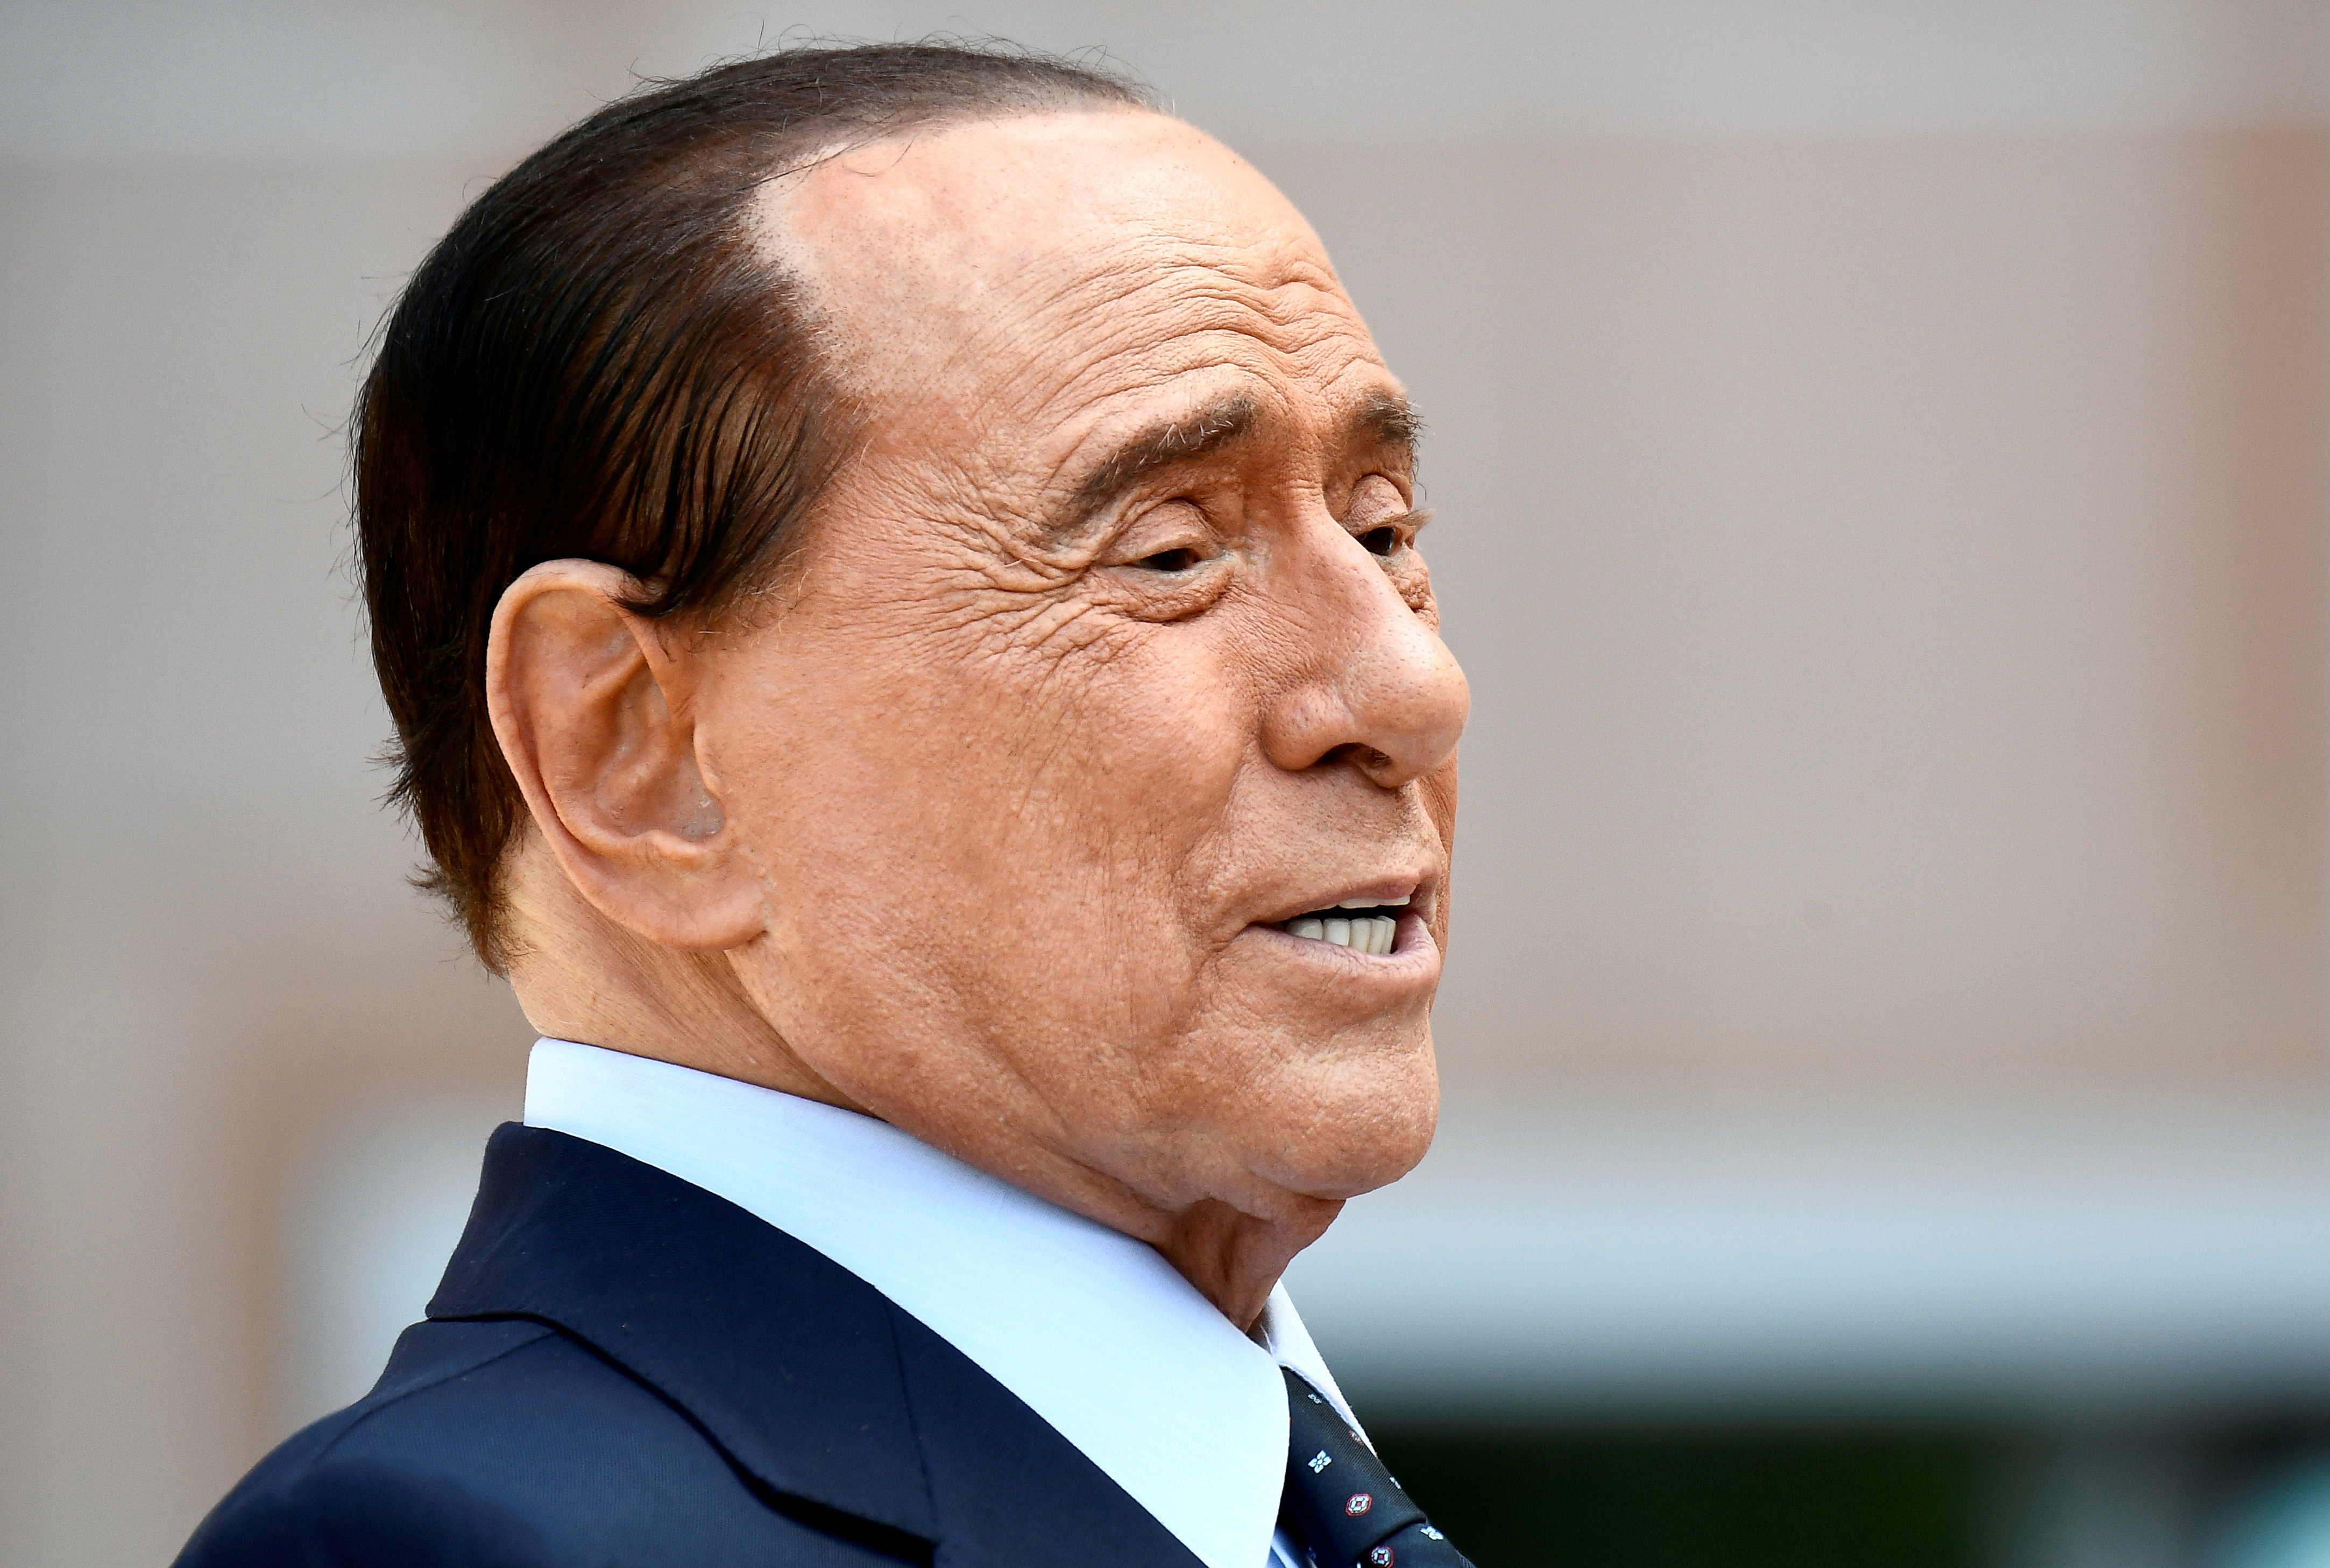 Former Italian Prime Minister Silvio Berlusconi speaks to the media as he leaves San Raffaele hospital in Milan, Italy, September 14, 2020. REUTERS/Flavio Lo Scalzo